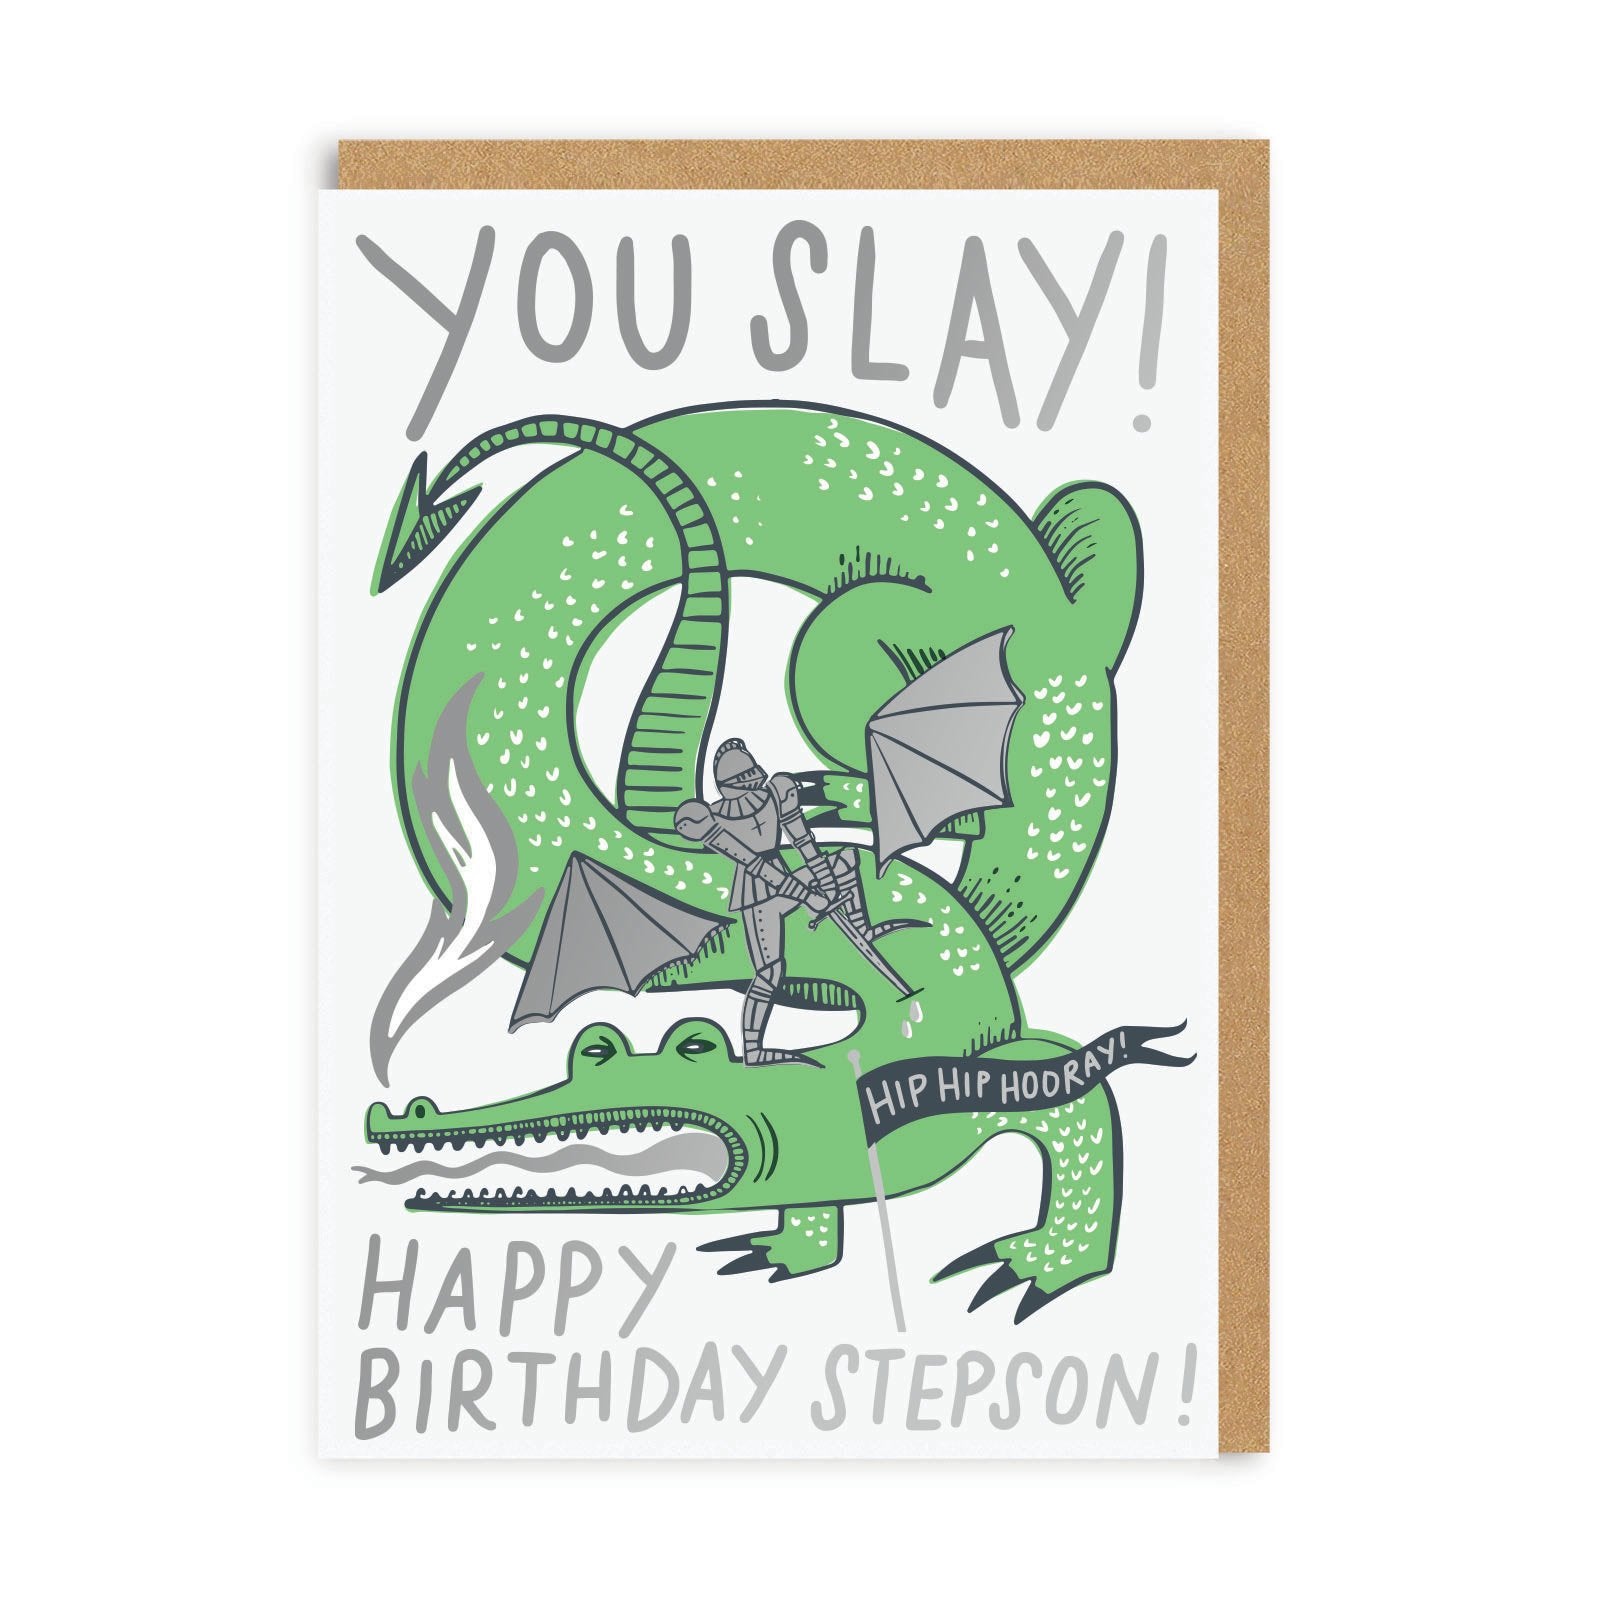 You Slay Stepson Greeting Card